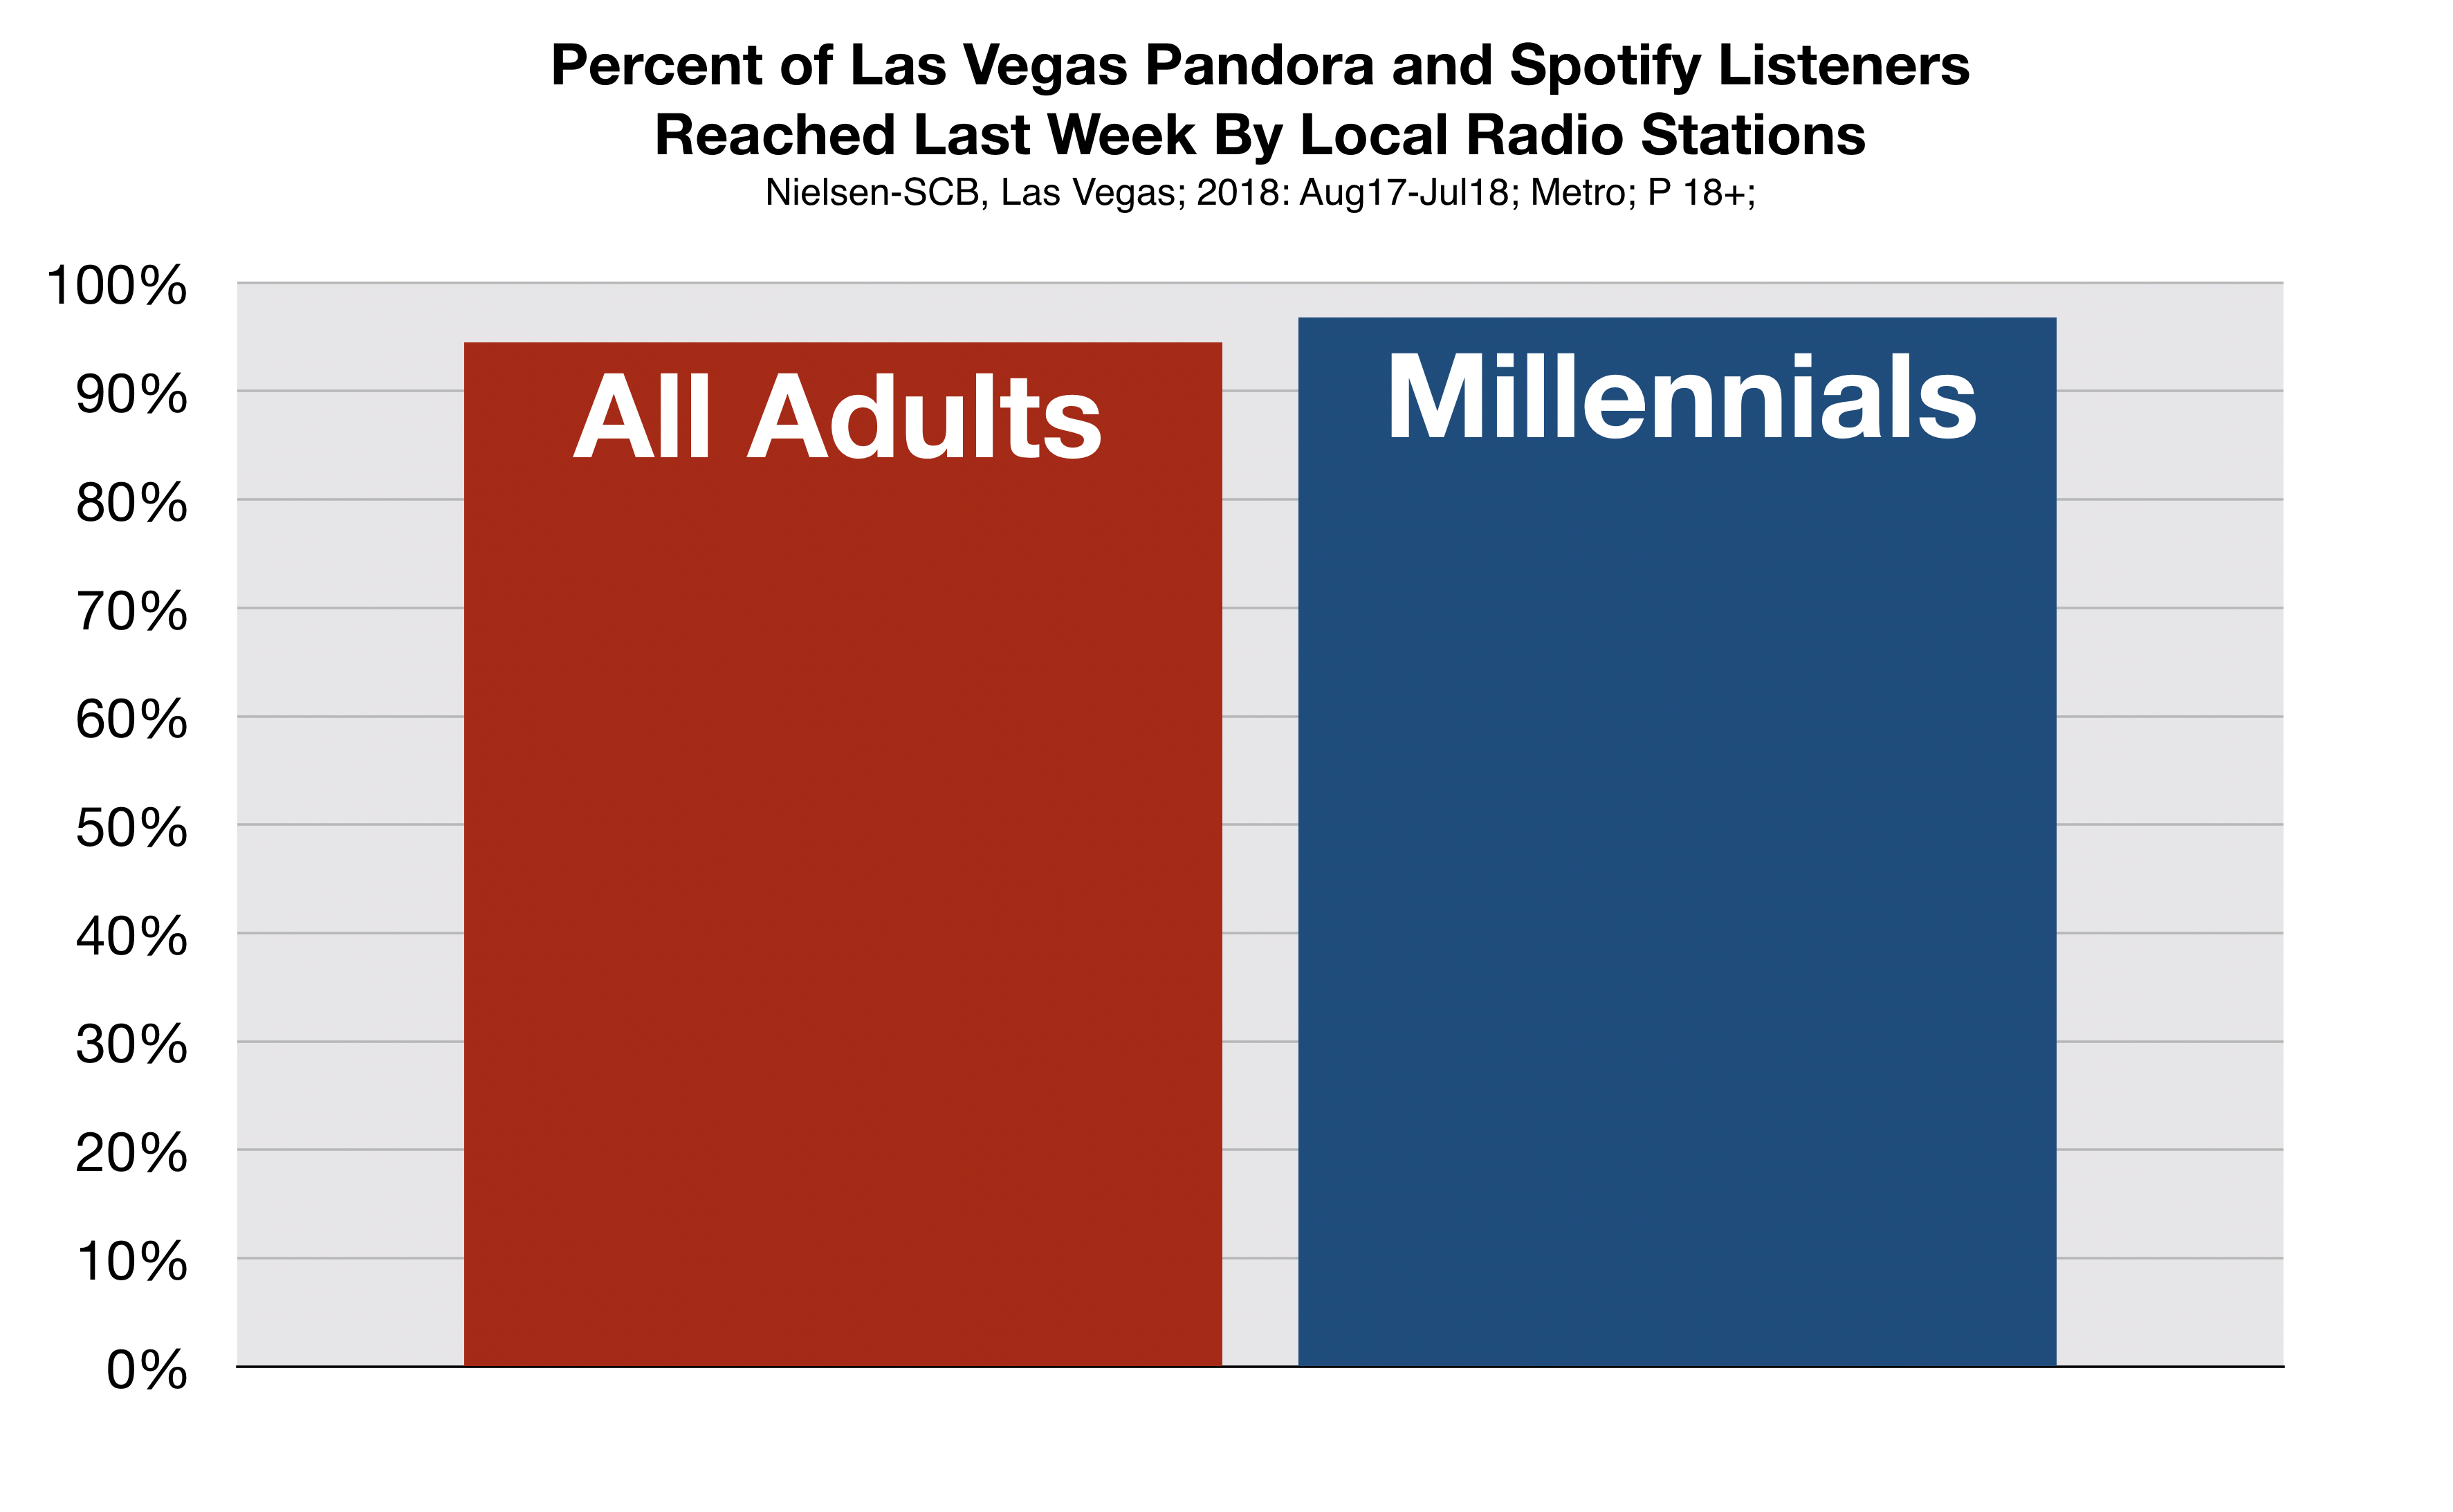 Advertising in Las Vegas Pandora and Spotify Millennials